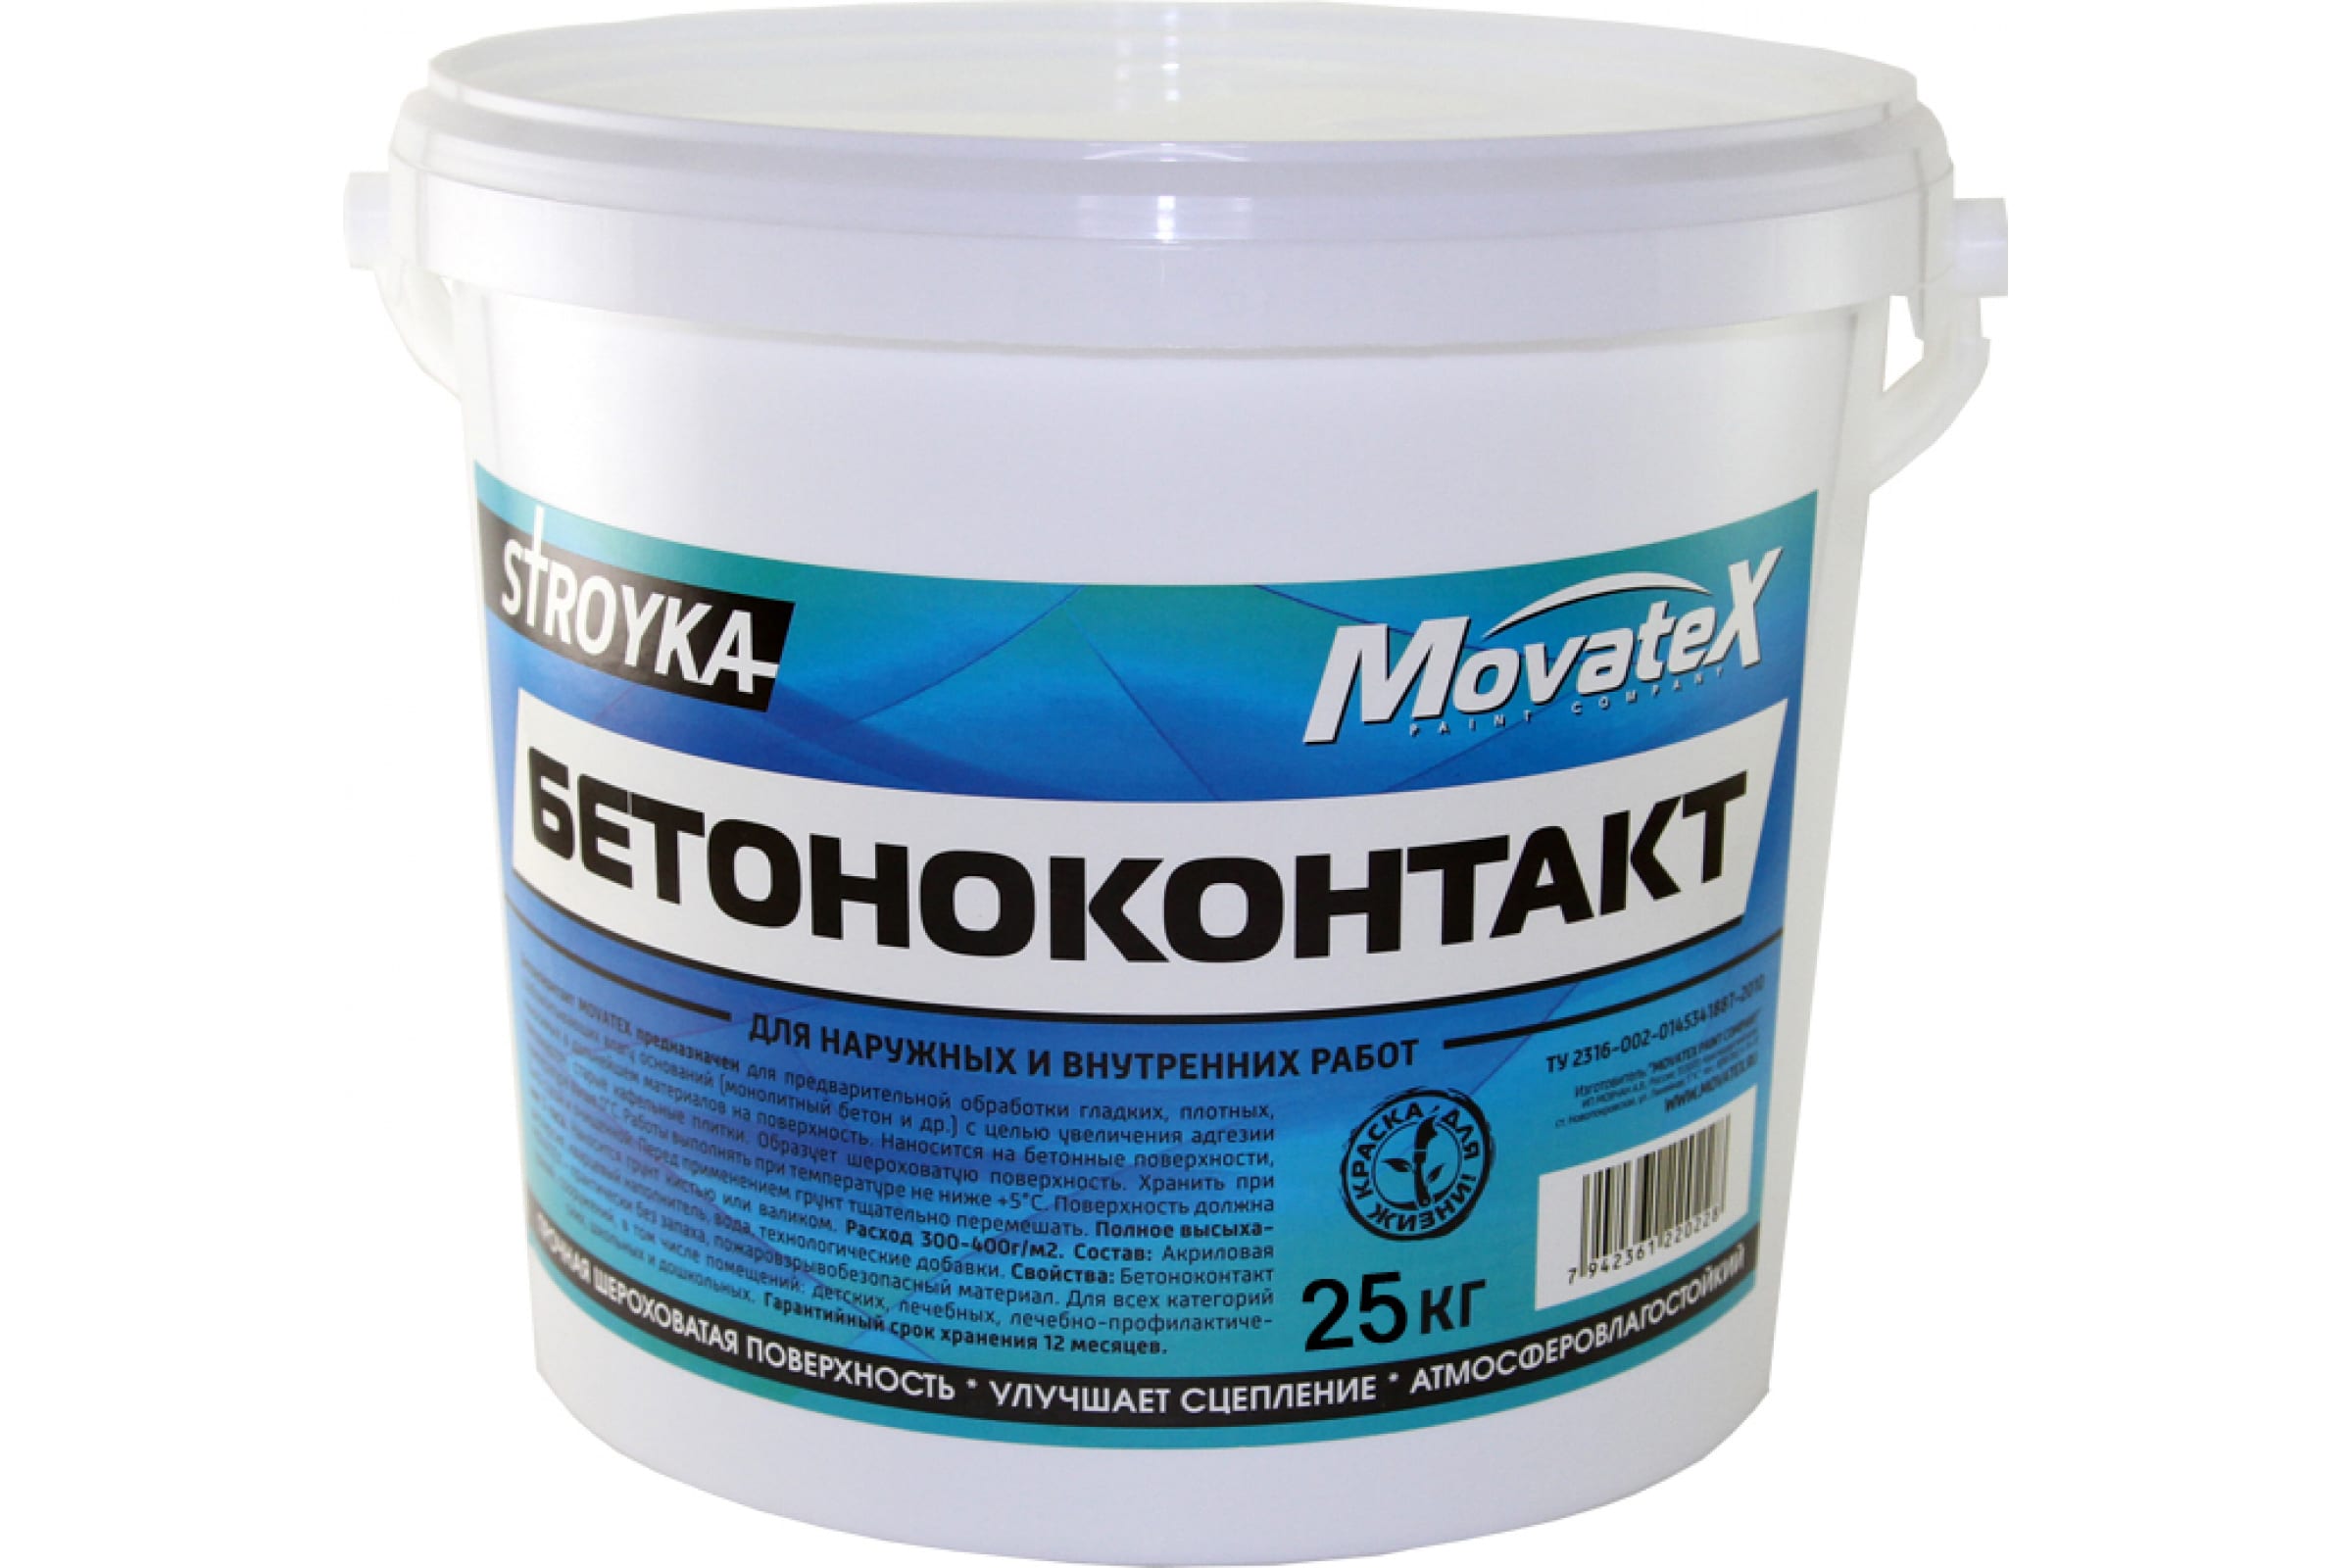 Movatex Бетонконтакт Stroyka 25кг Т31703